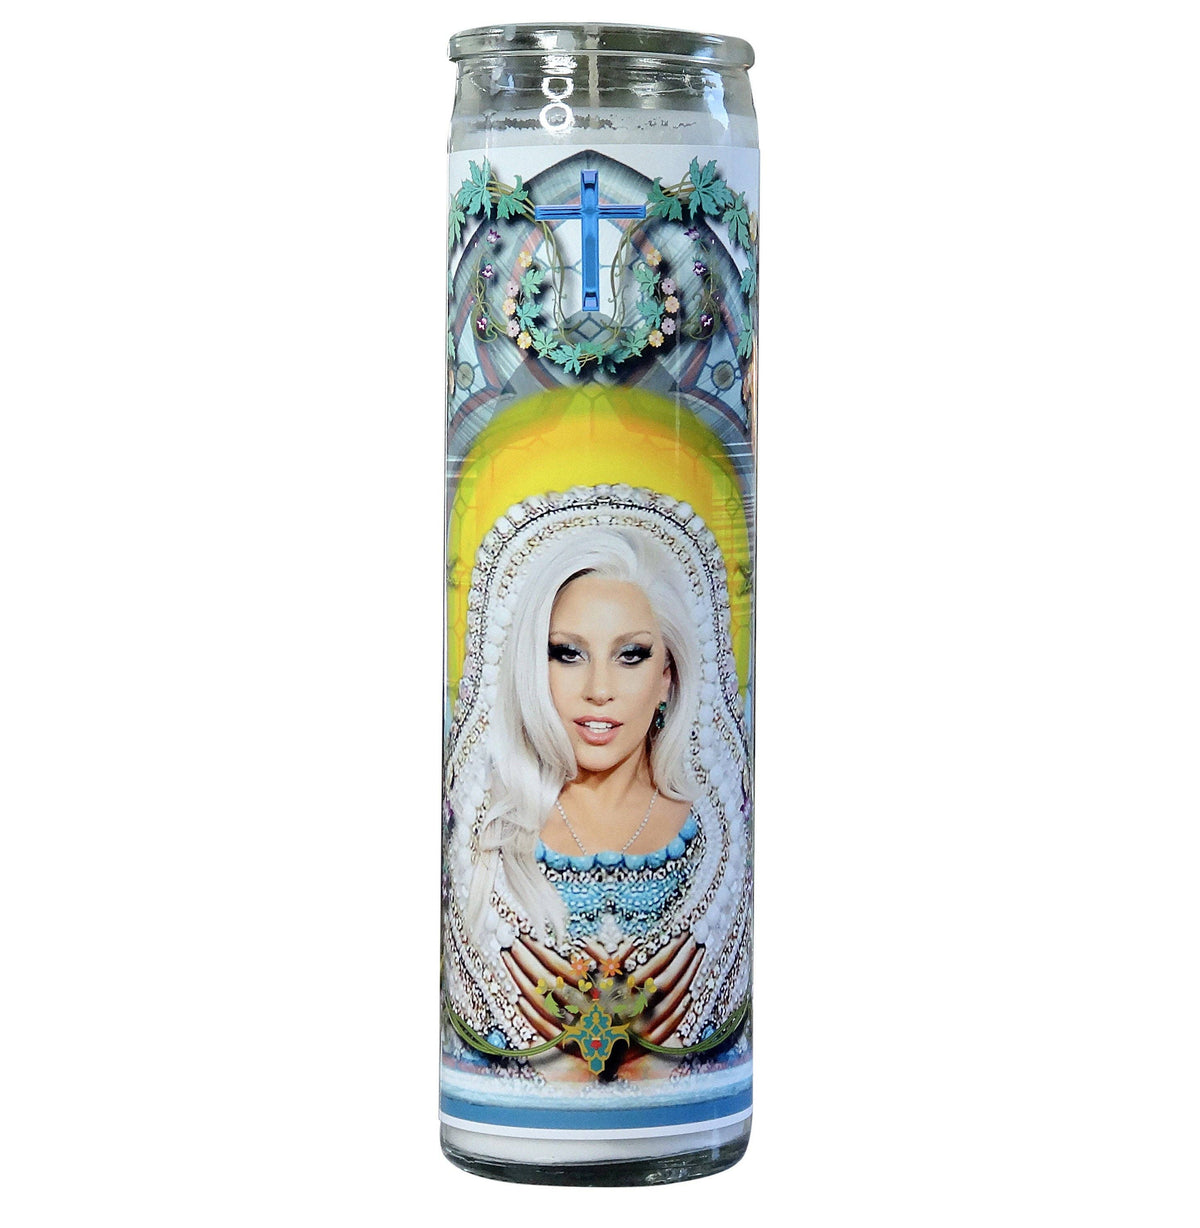 Lady Gaga Celebrity Prayer Candle